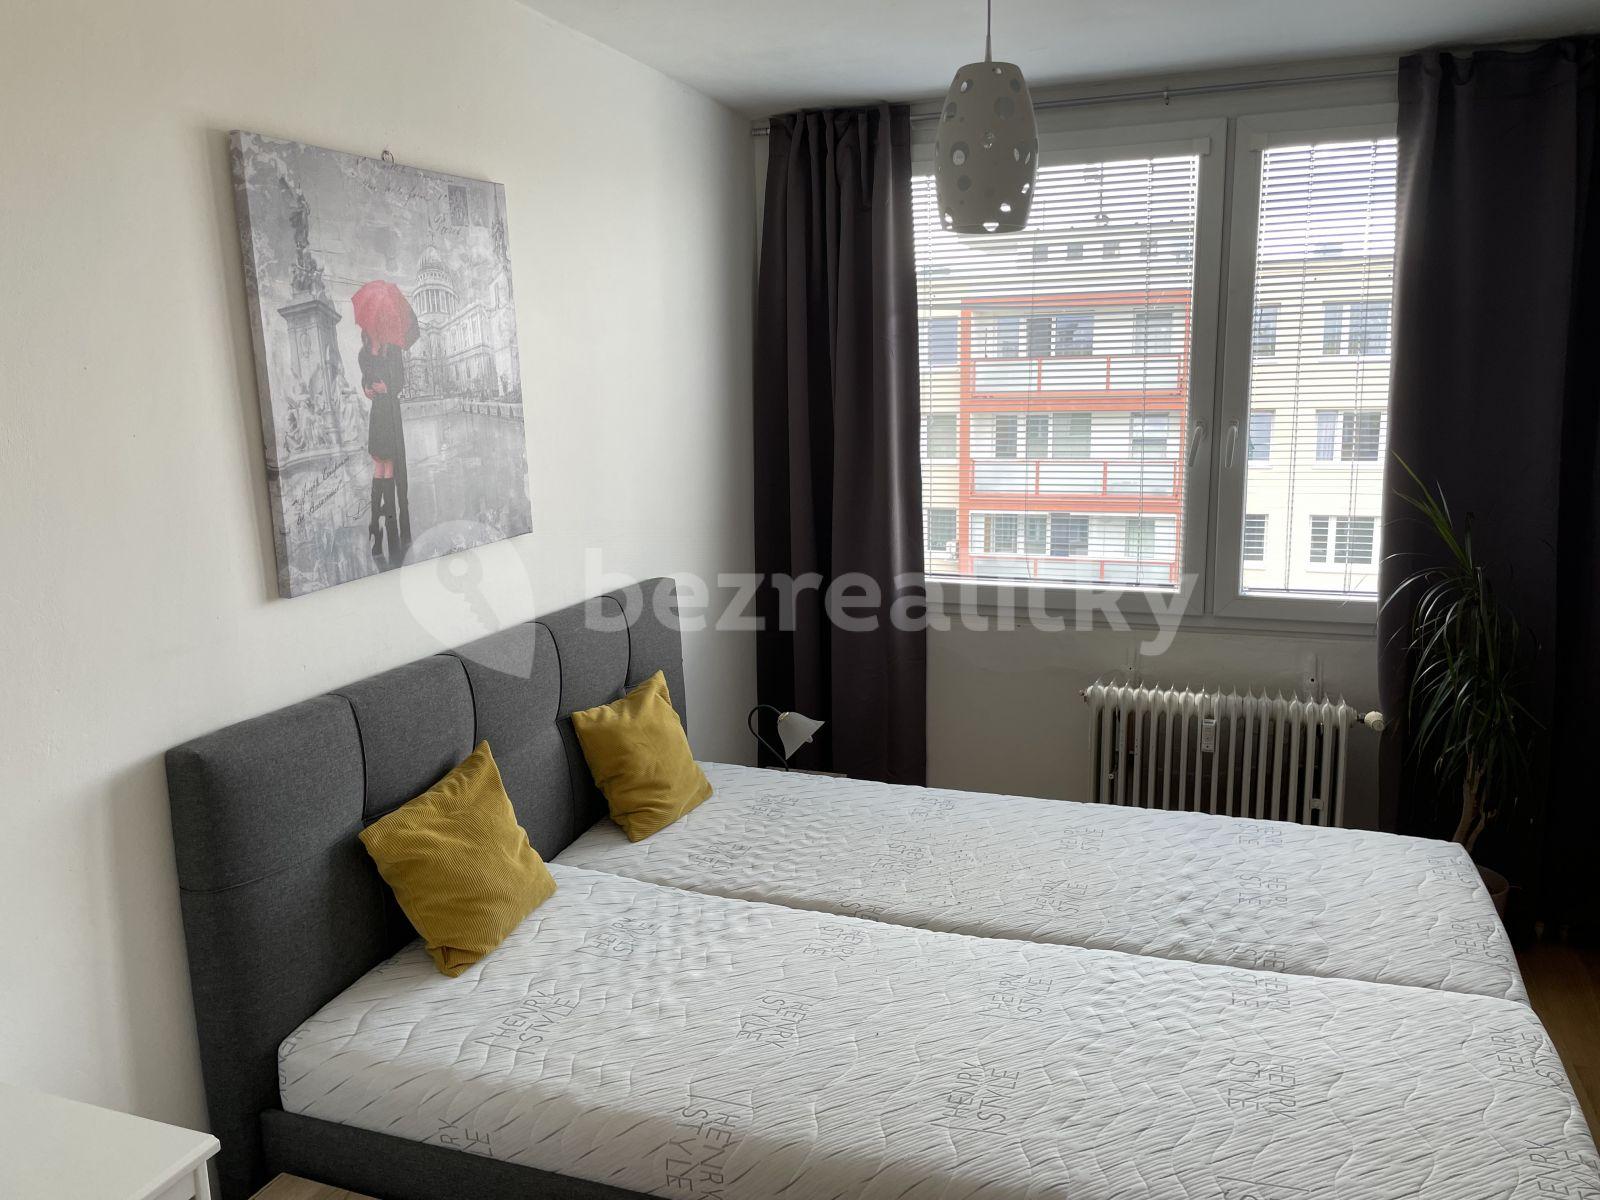 1 bedroom with open-plan kitchen flat to rent, 43 m², Prague, Prague